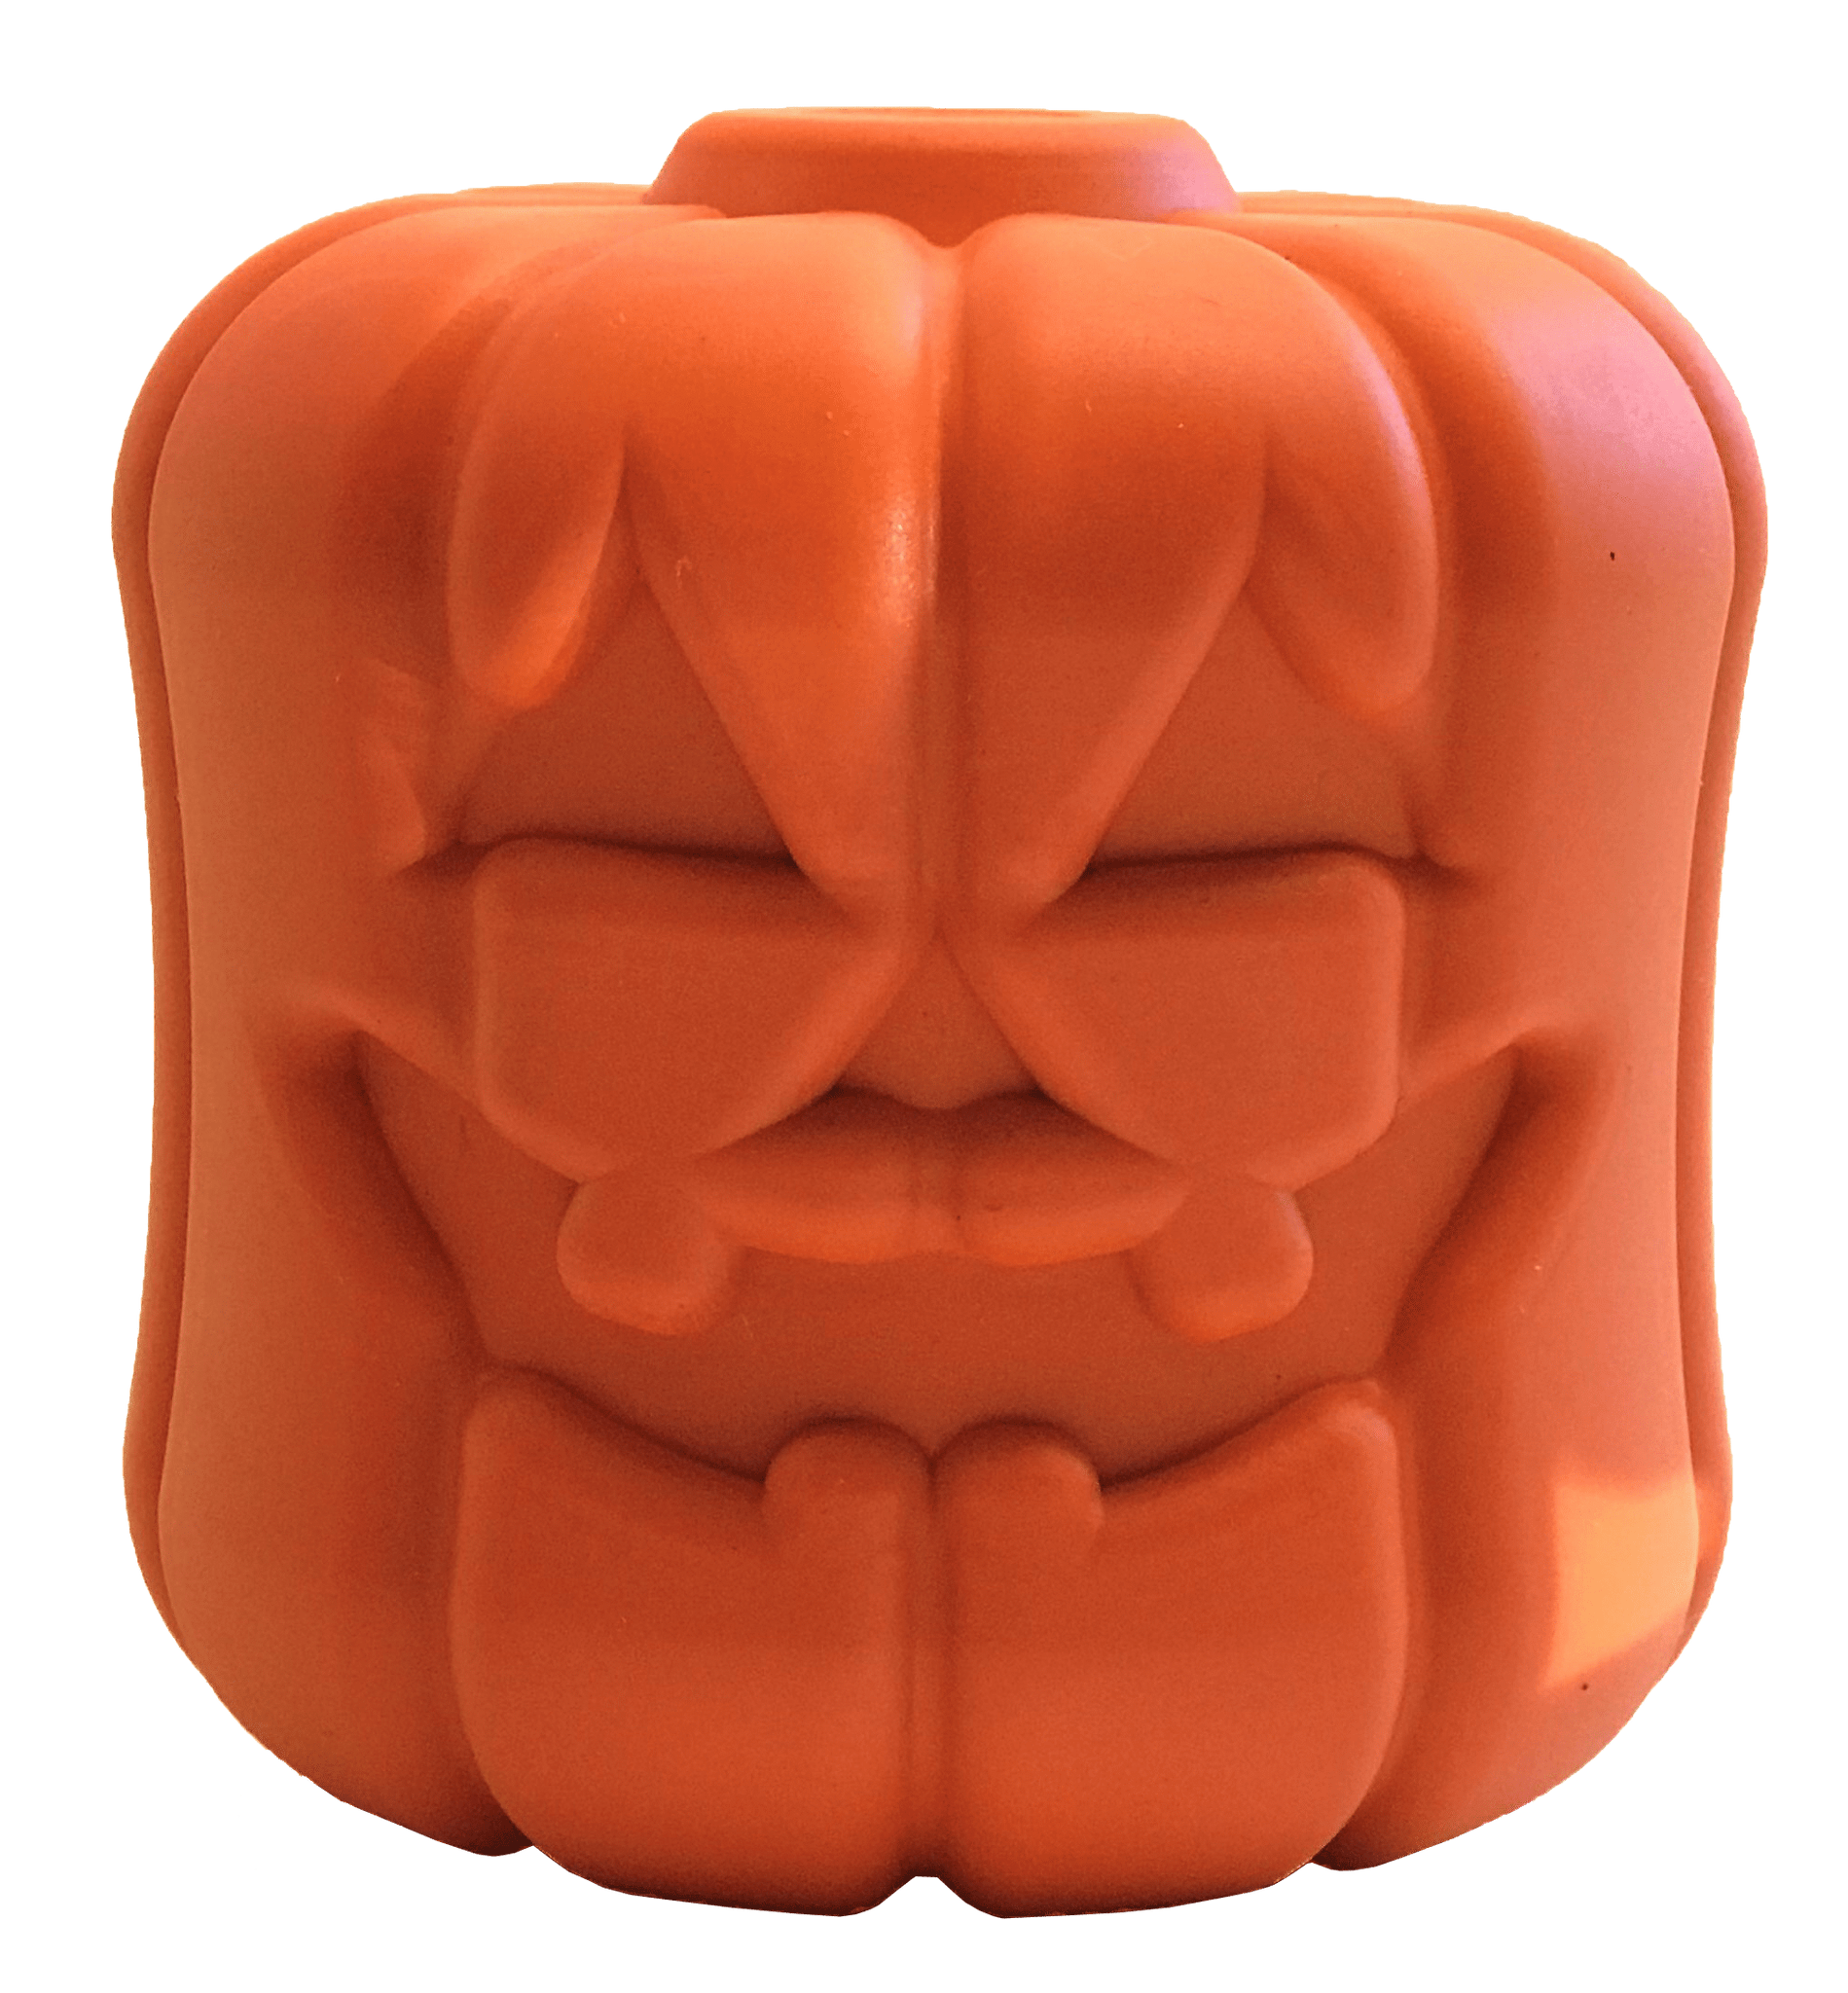 MKB Jack O' Lantern Durable Rubber Chew Toy & Treat Dispenser - Large - Orange - Large Jack-O-Lantern Toy